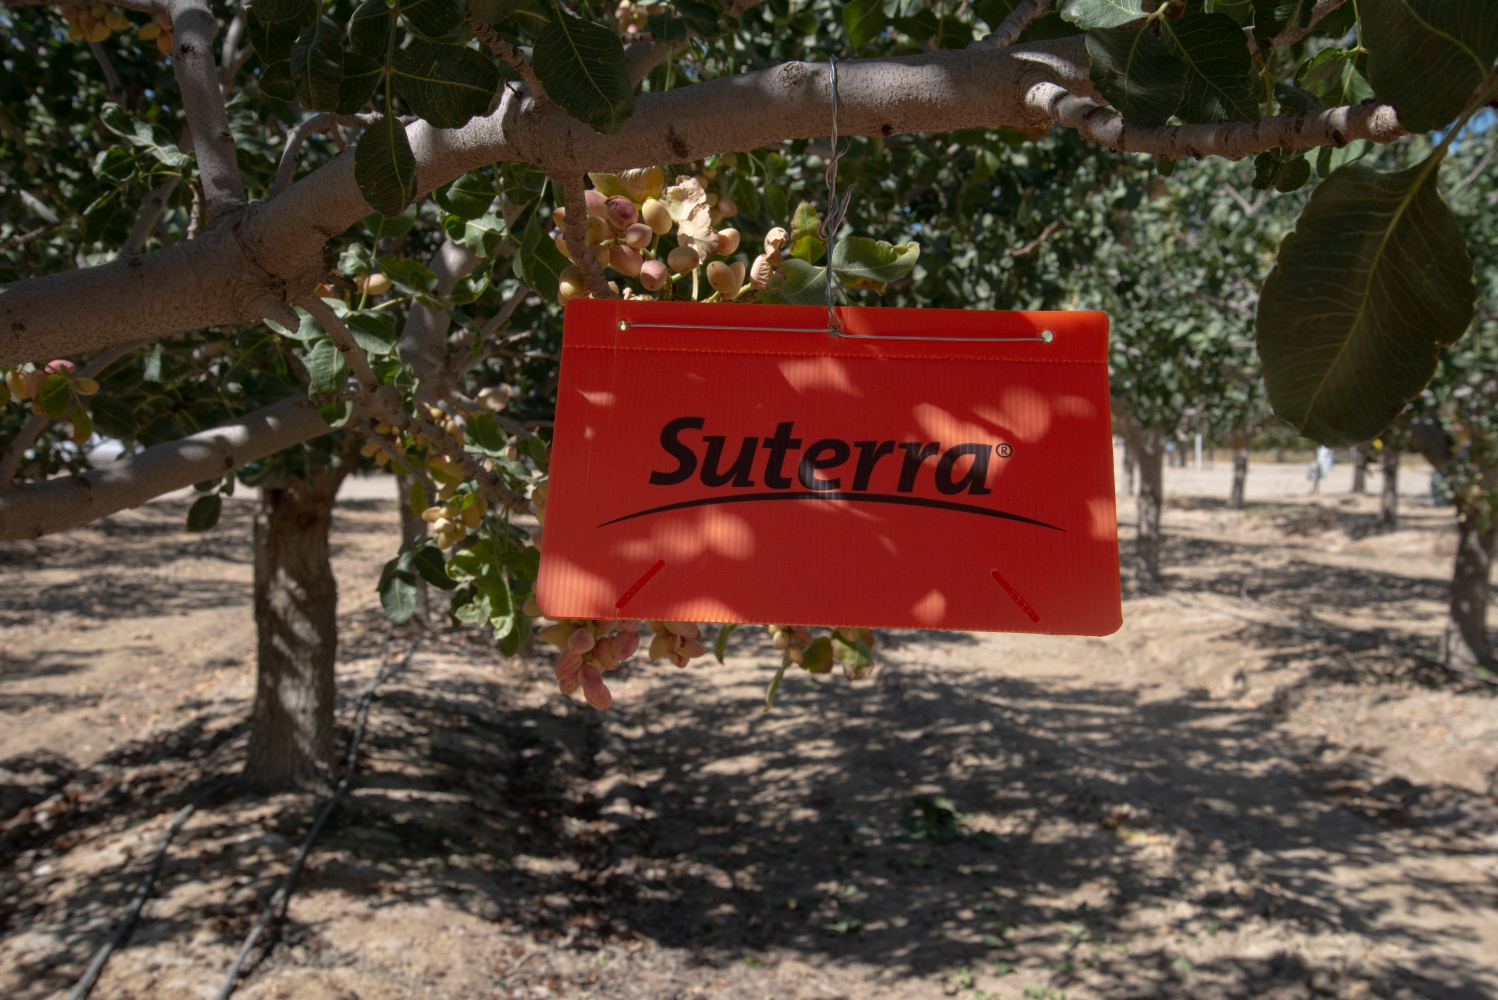 Suterra trap hangs in a nut orchard.